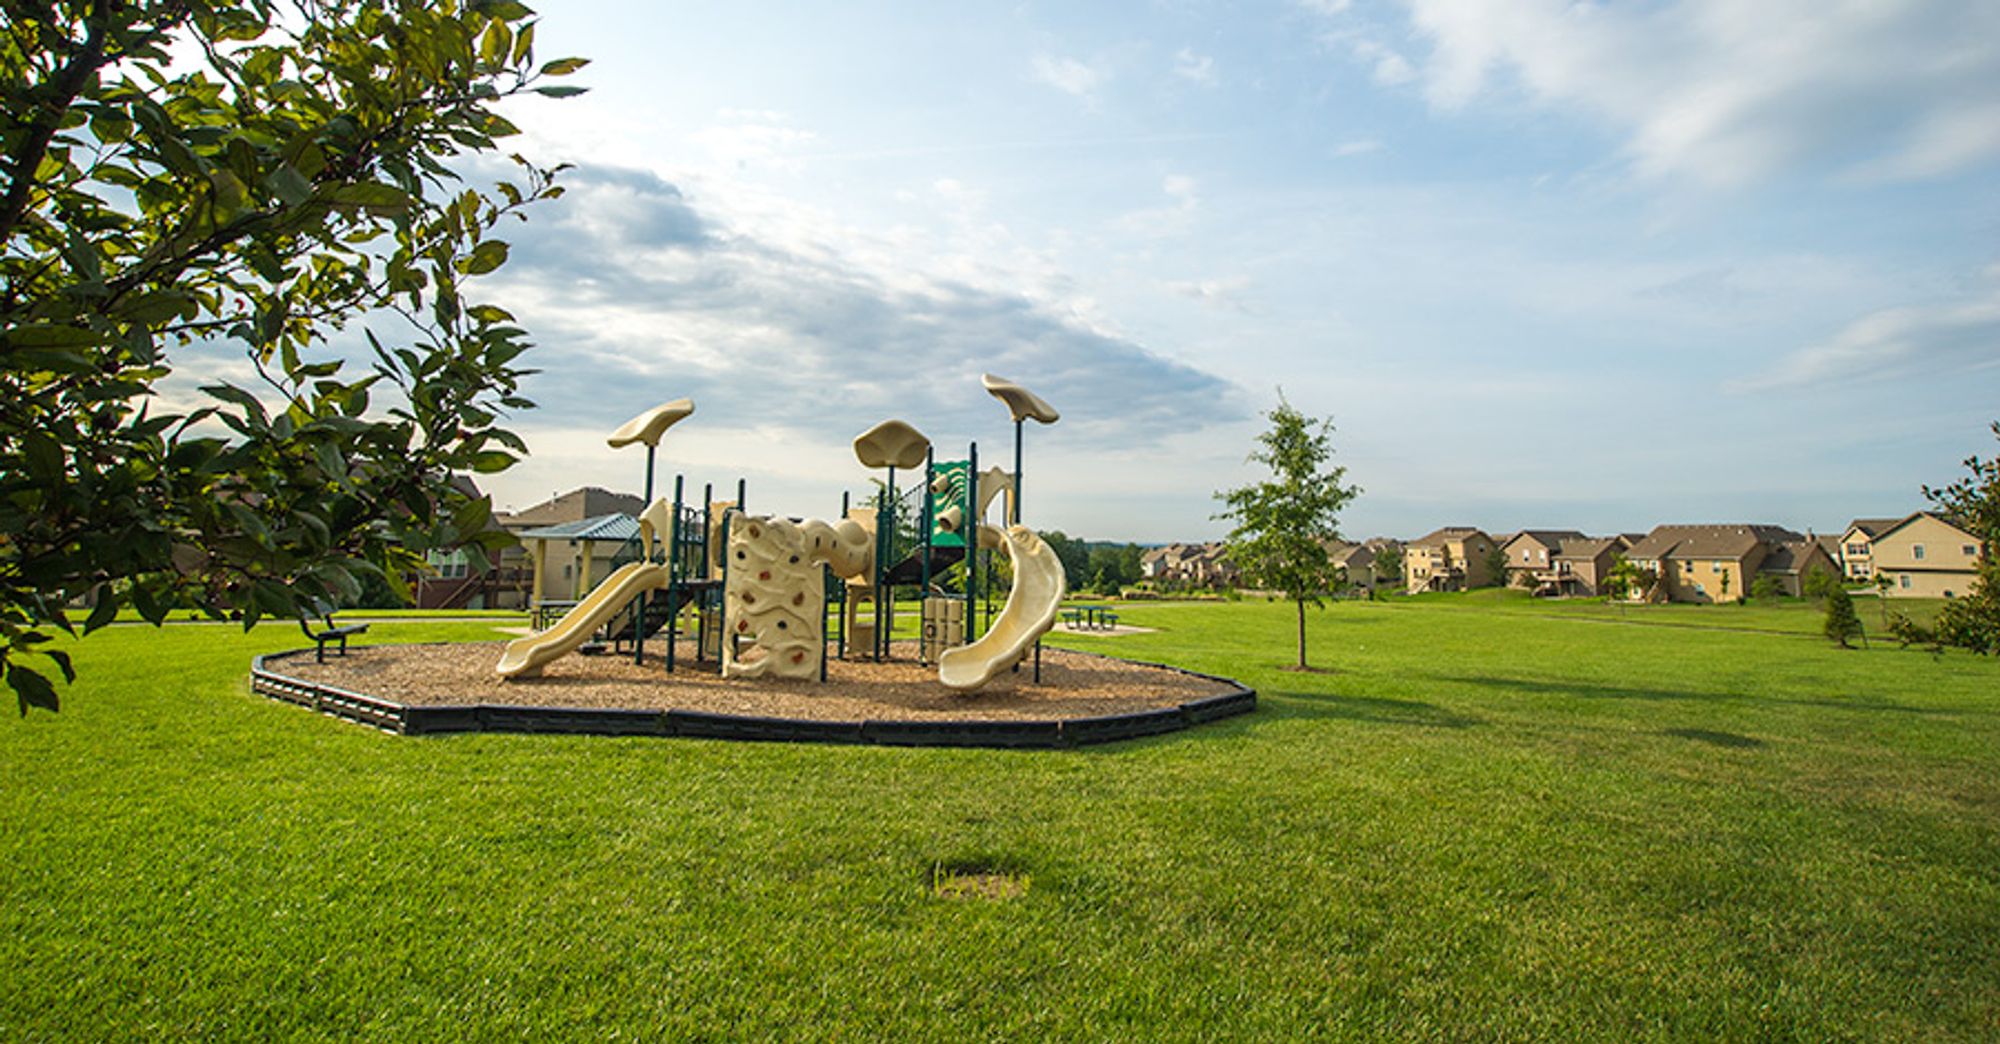 Benson Place playground amenity.